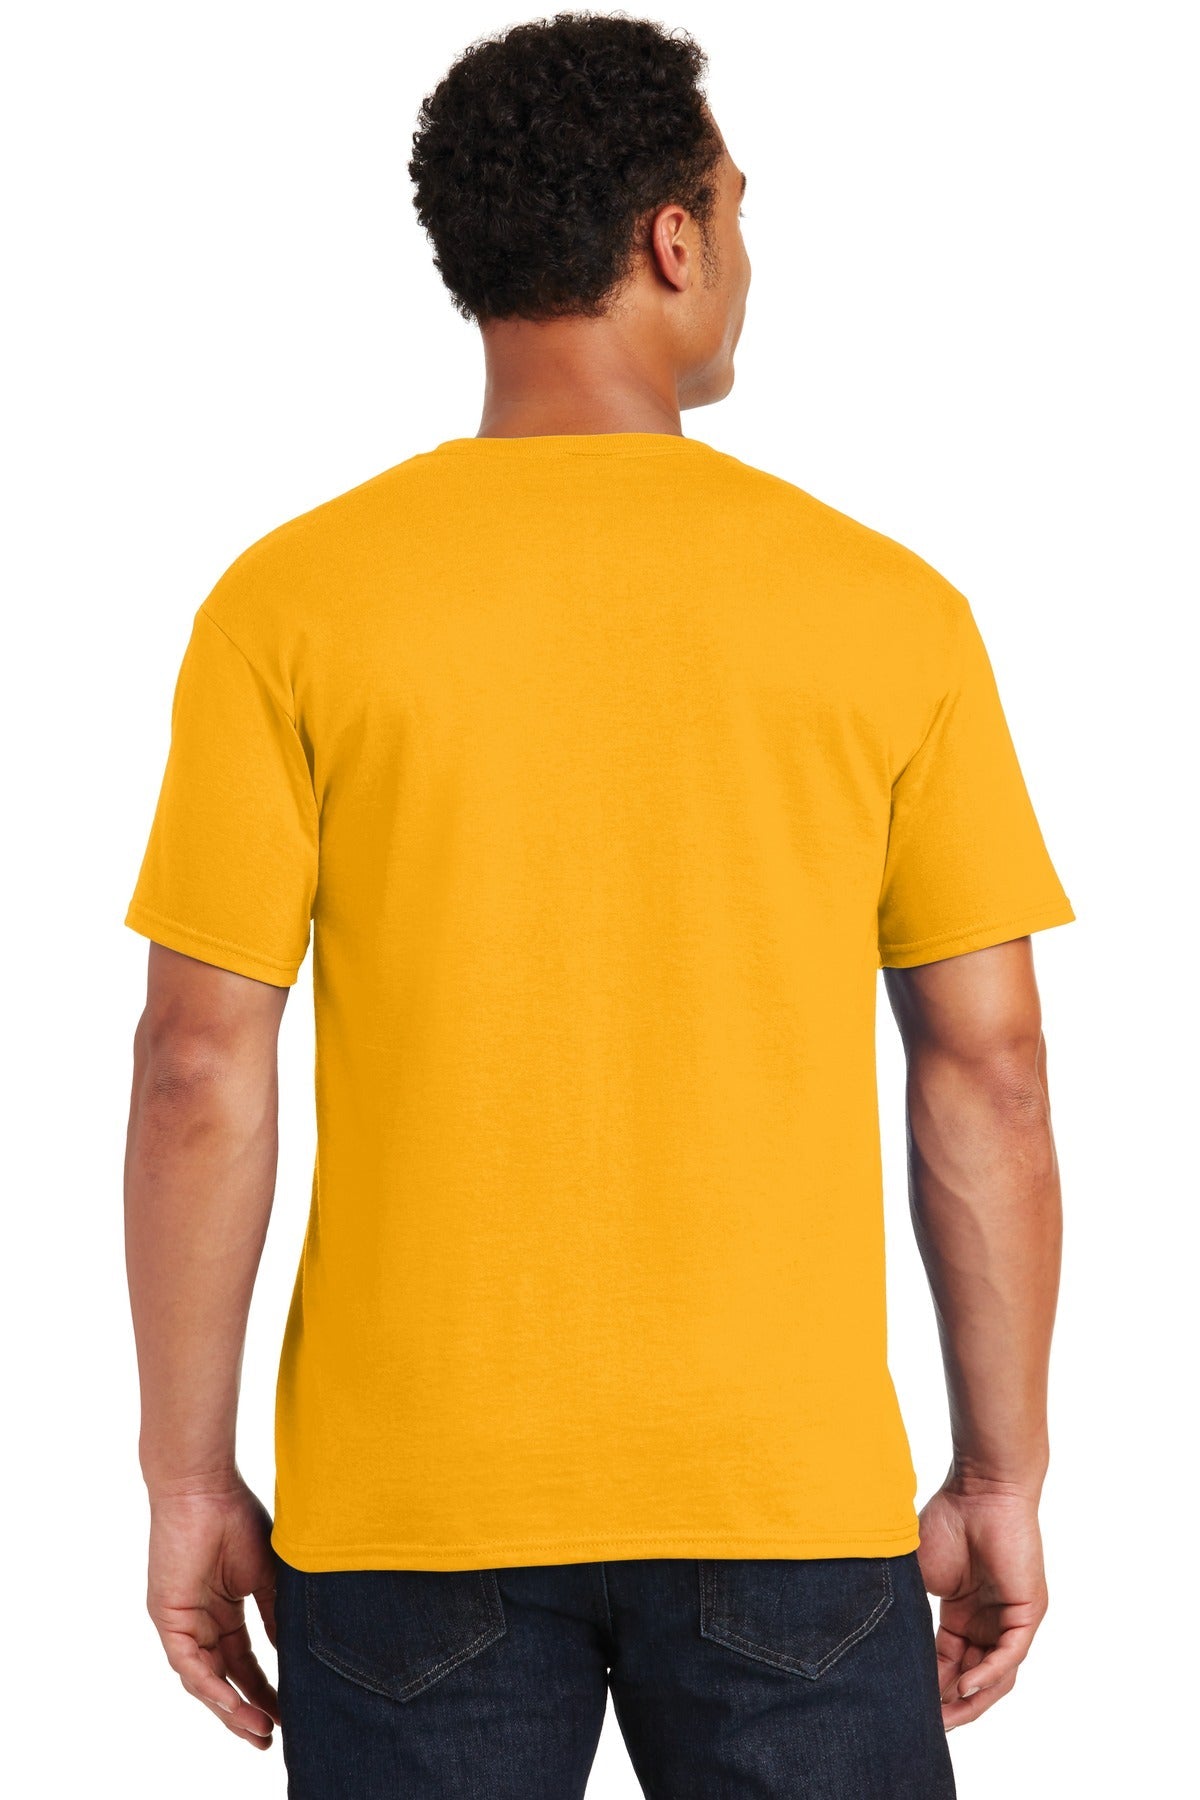 JERZEES® - Dri-Power® 50/50 Cotton/Poly T-Shirt. 29M [Gold] - DFW Impression